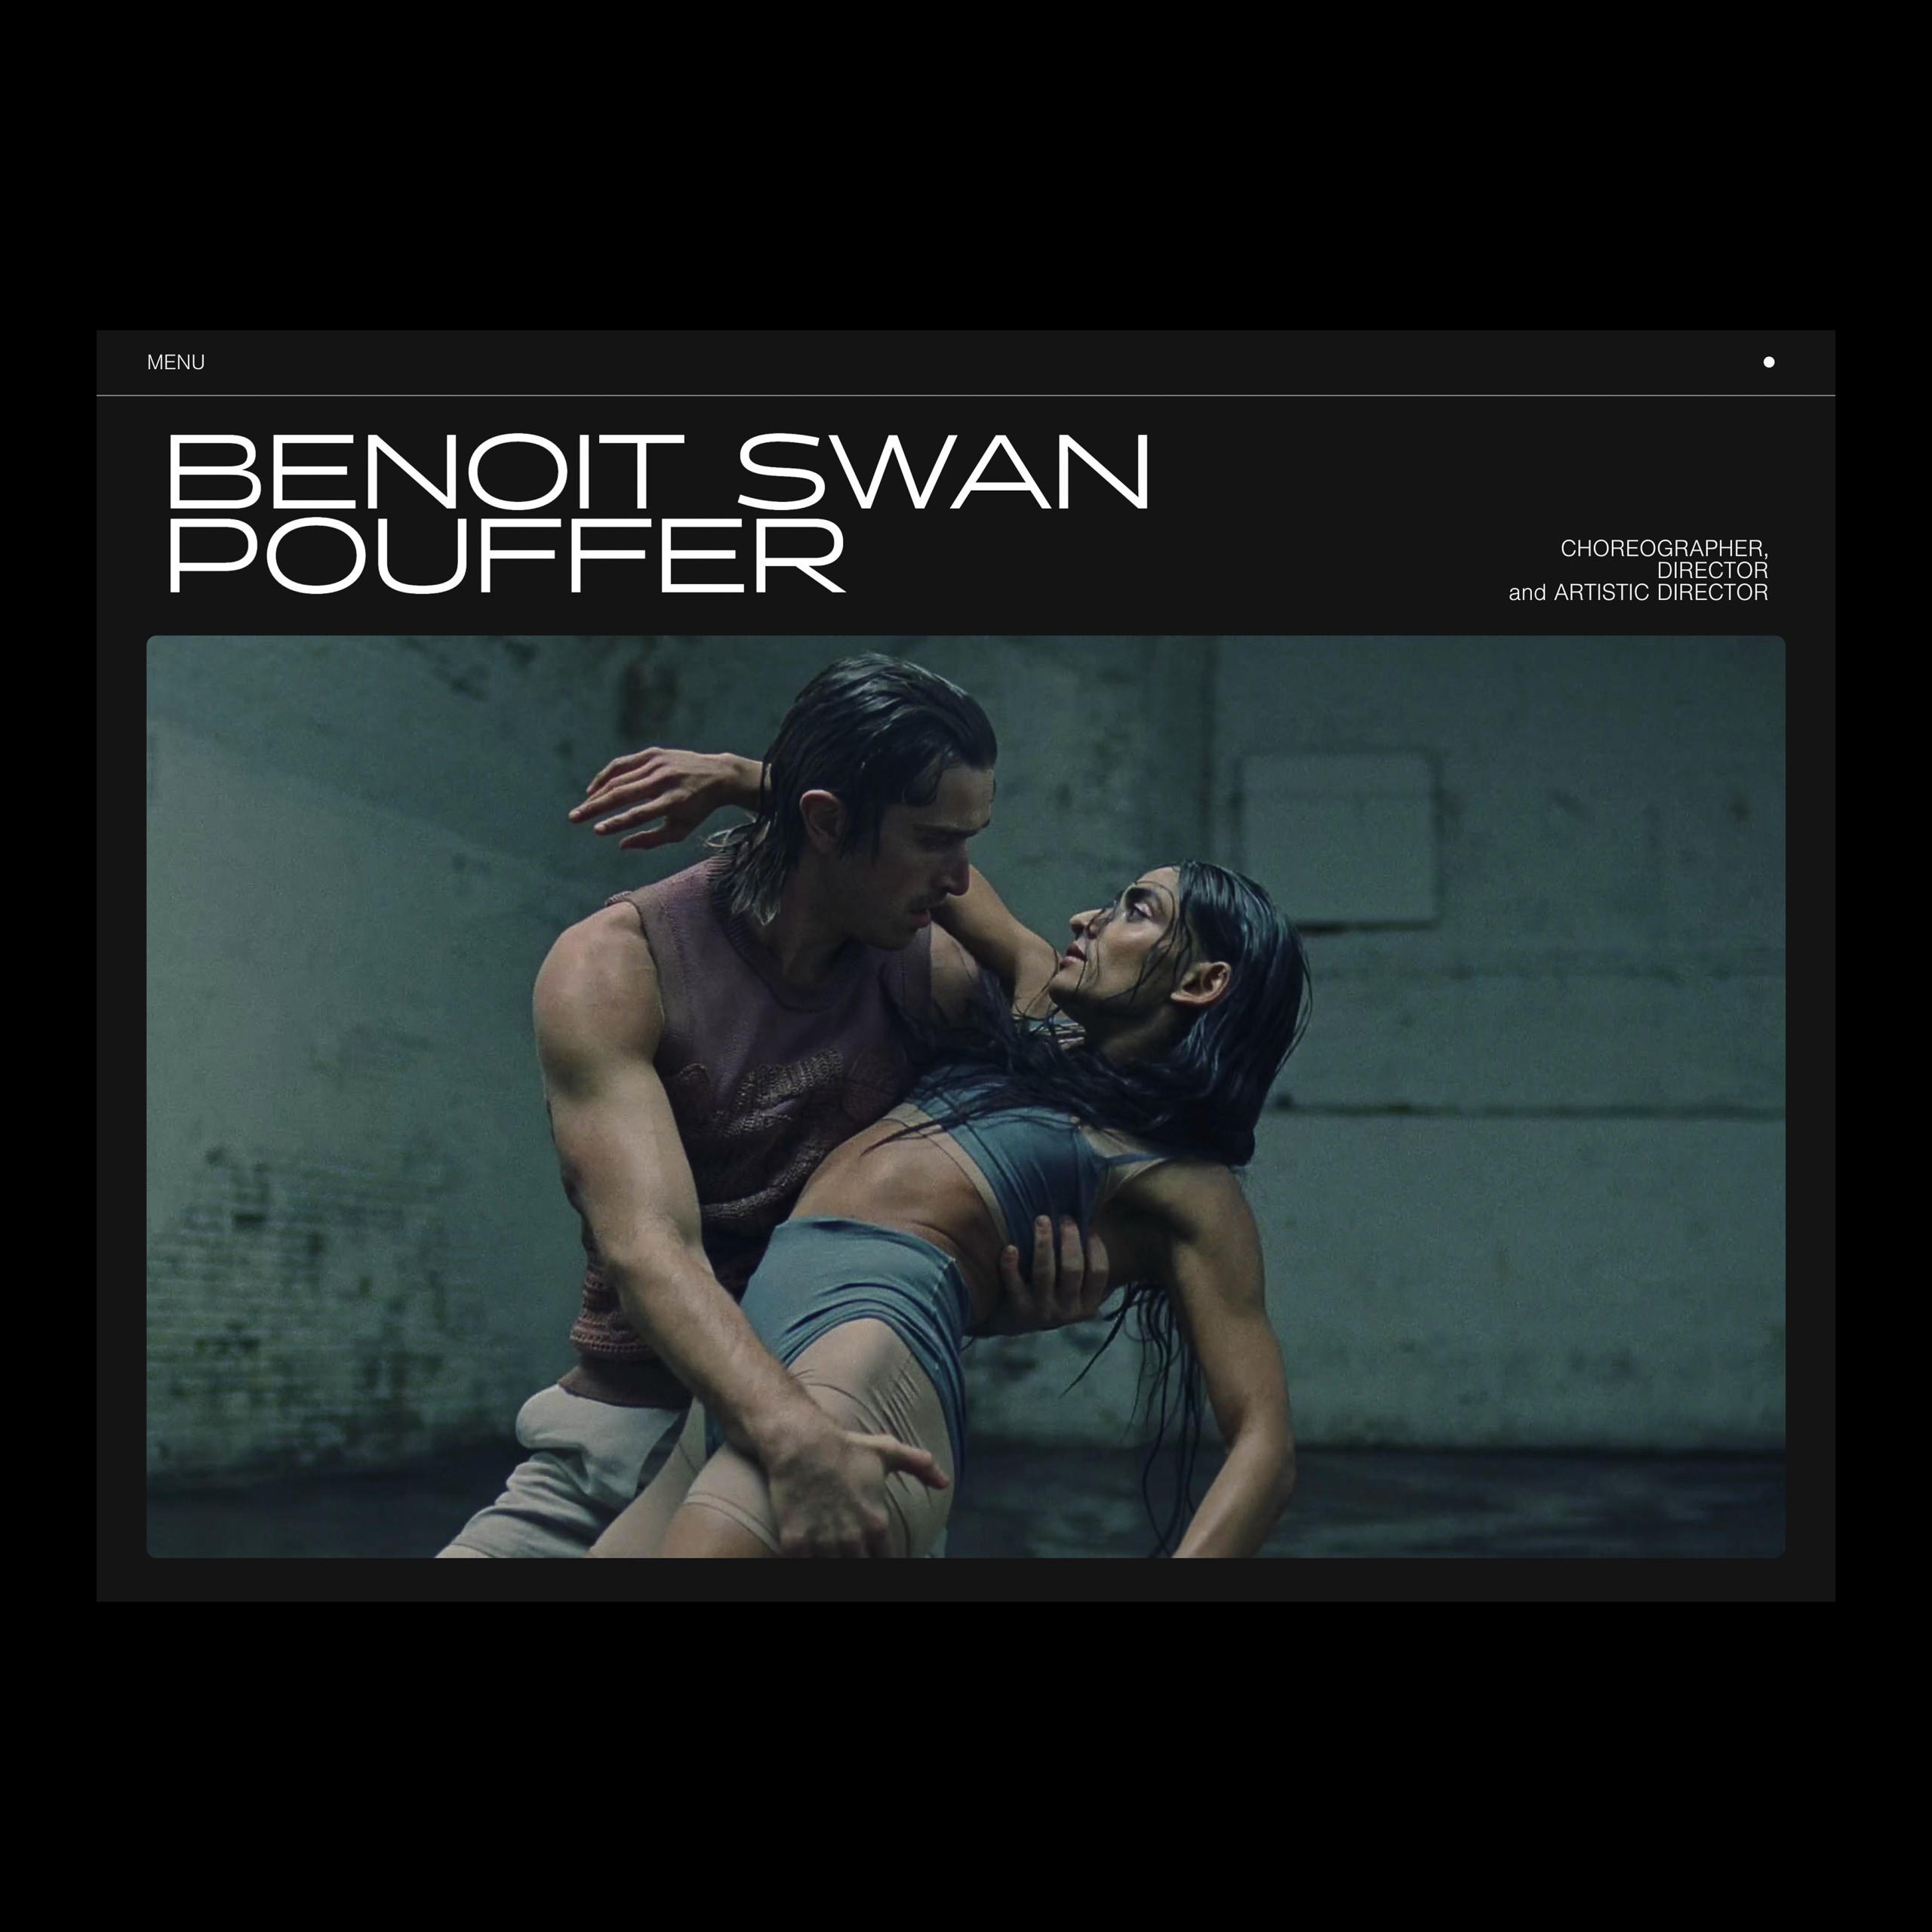 Benoit Swan Pouffer